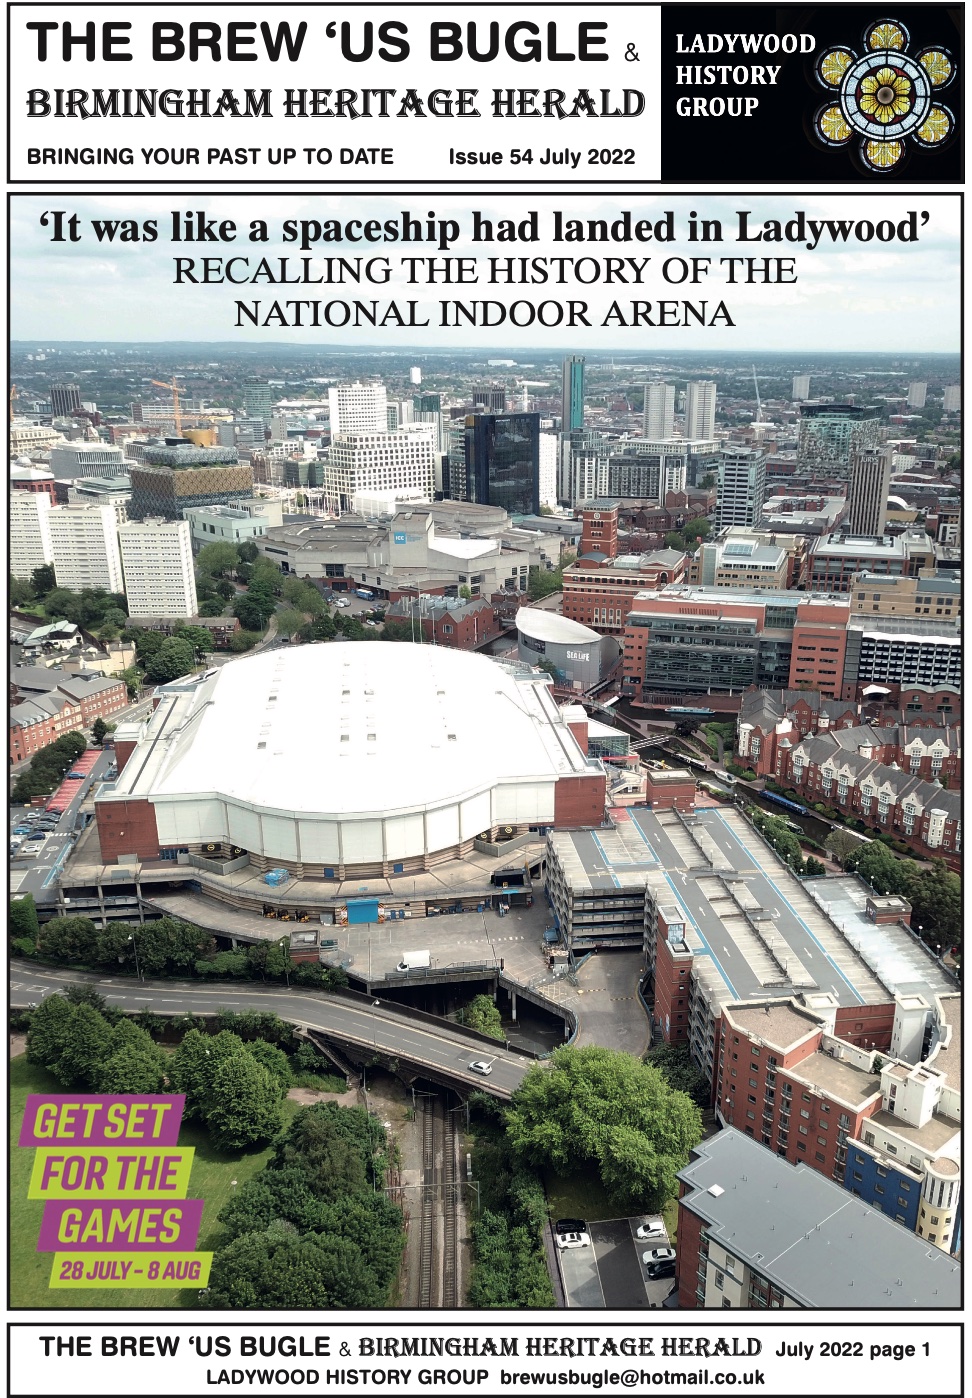 The Brew 'Us Bugle & Birmingham Heritage Herald issue 54